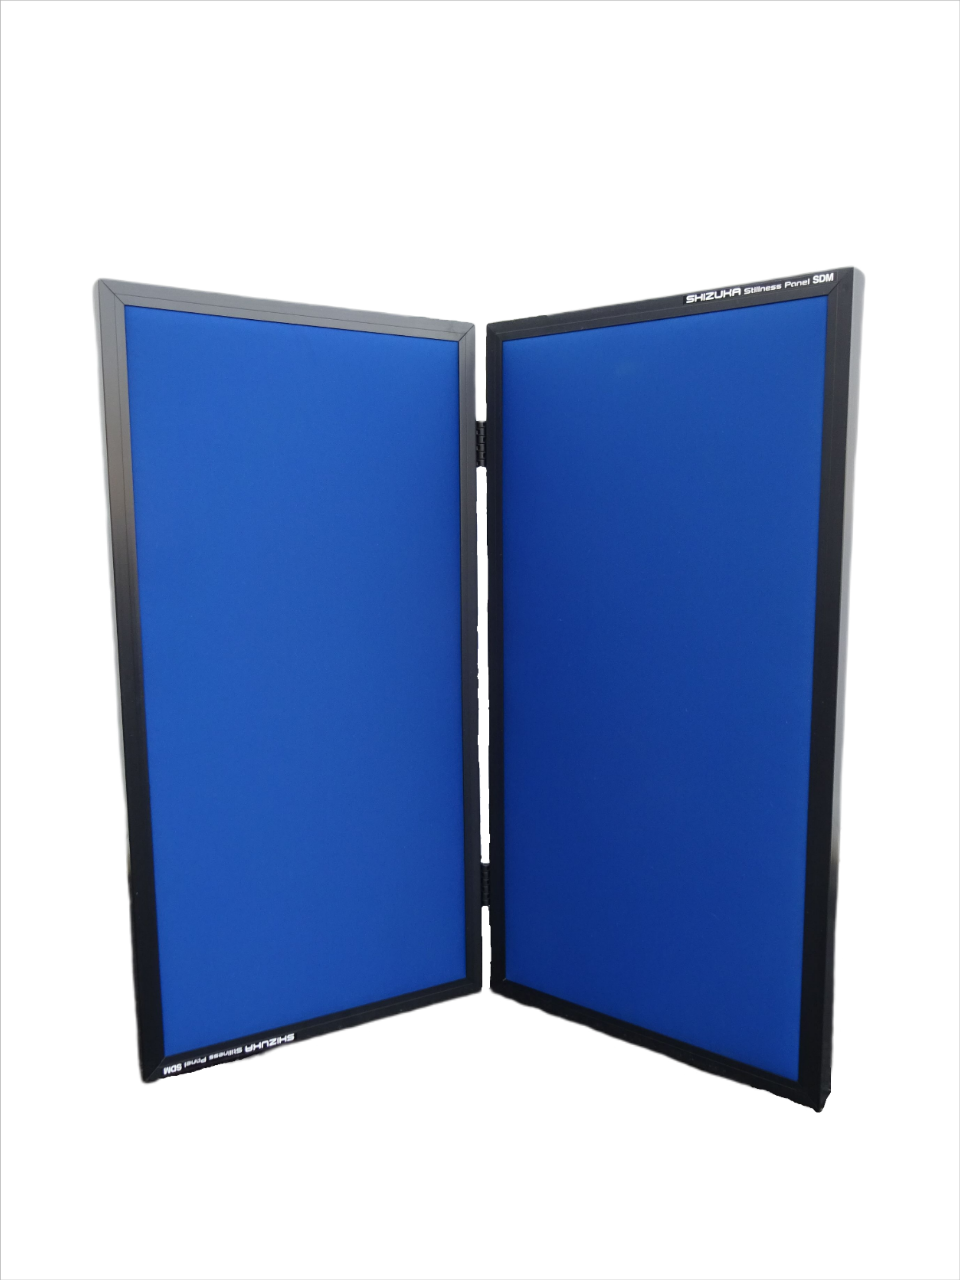 SHIZUKA Stillness Panel SDM-900 (blue　高さ900㎜） - サイレント・プロバイダー